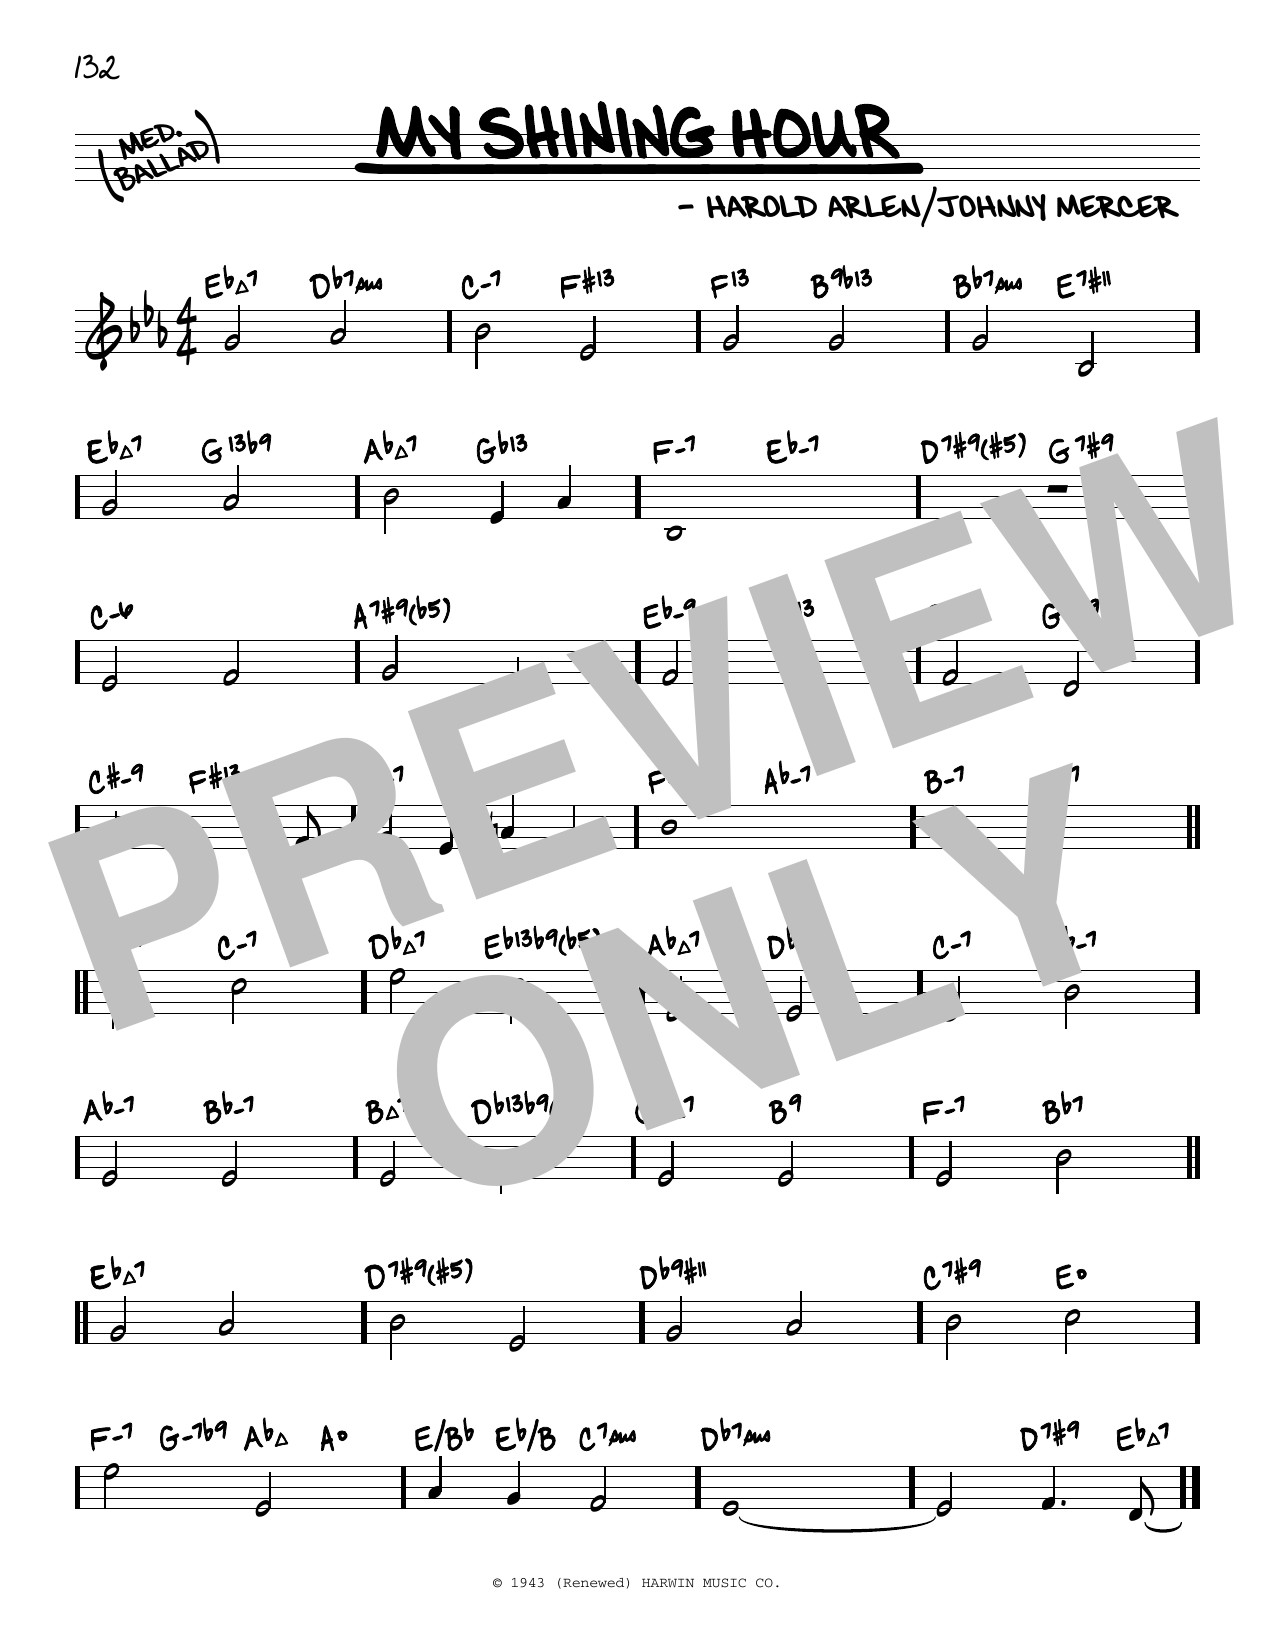 Harold Arlen My Shining Hour (arr. David Hazeltine) Sheet Music Notes & Chords for Real Book – Enhanced Chords - Download or Print PDF